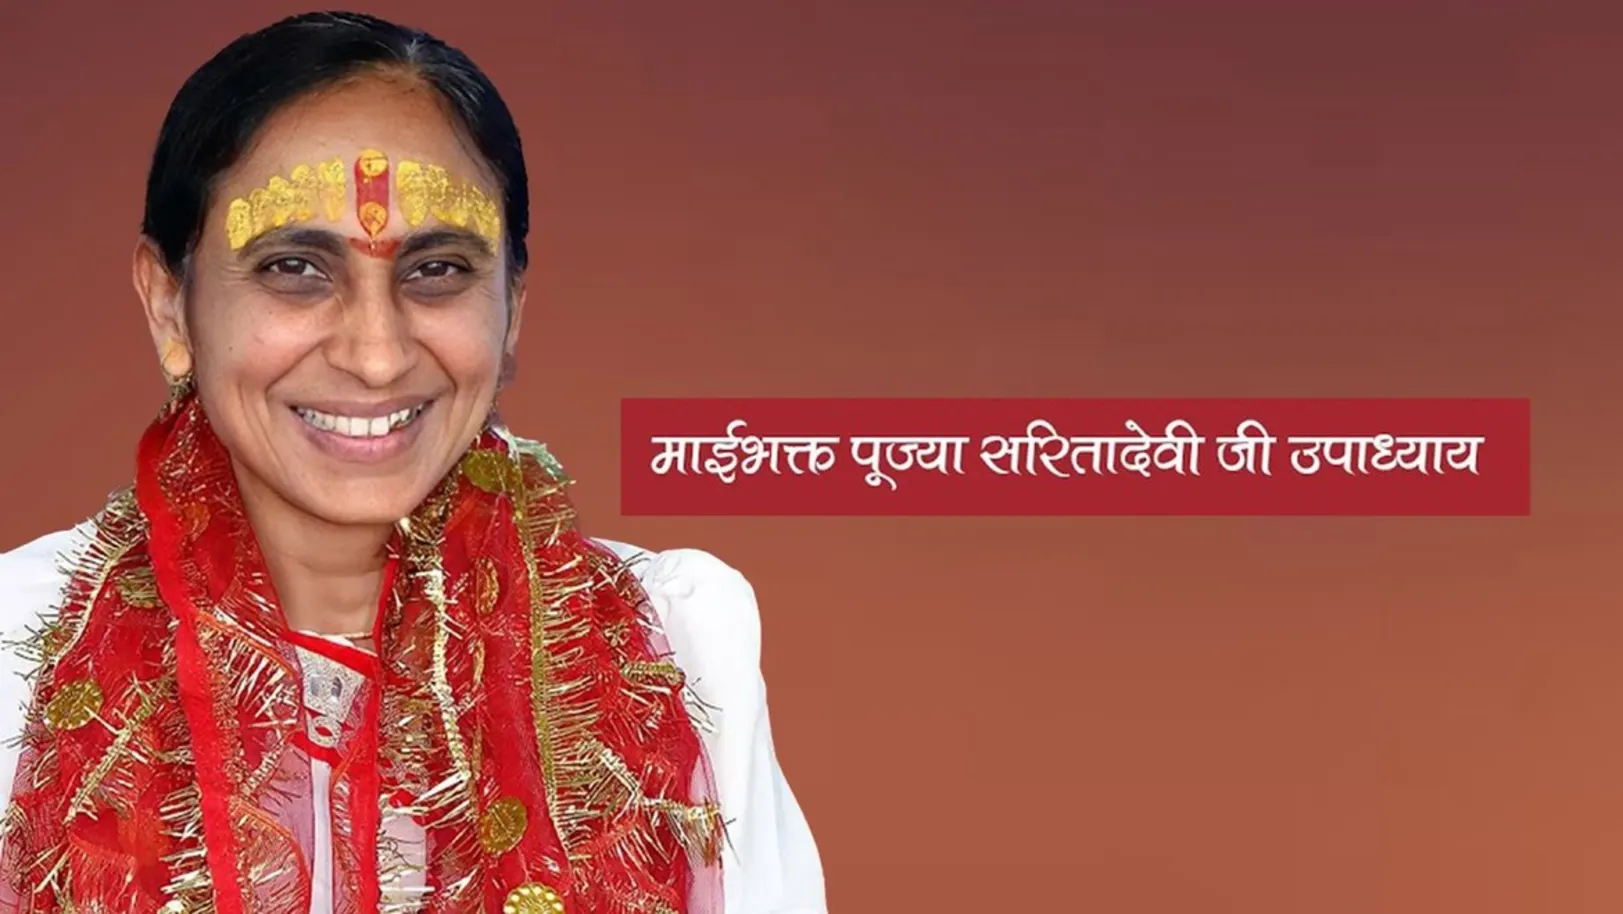 Mai Bhakt Pujya Sarita Devi Ji Upadhyay Live Streaming Now On Aastha